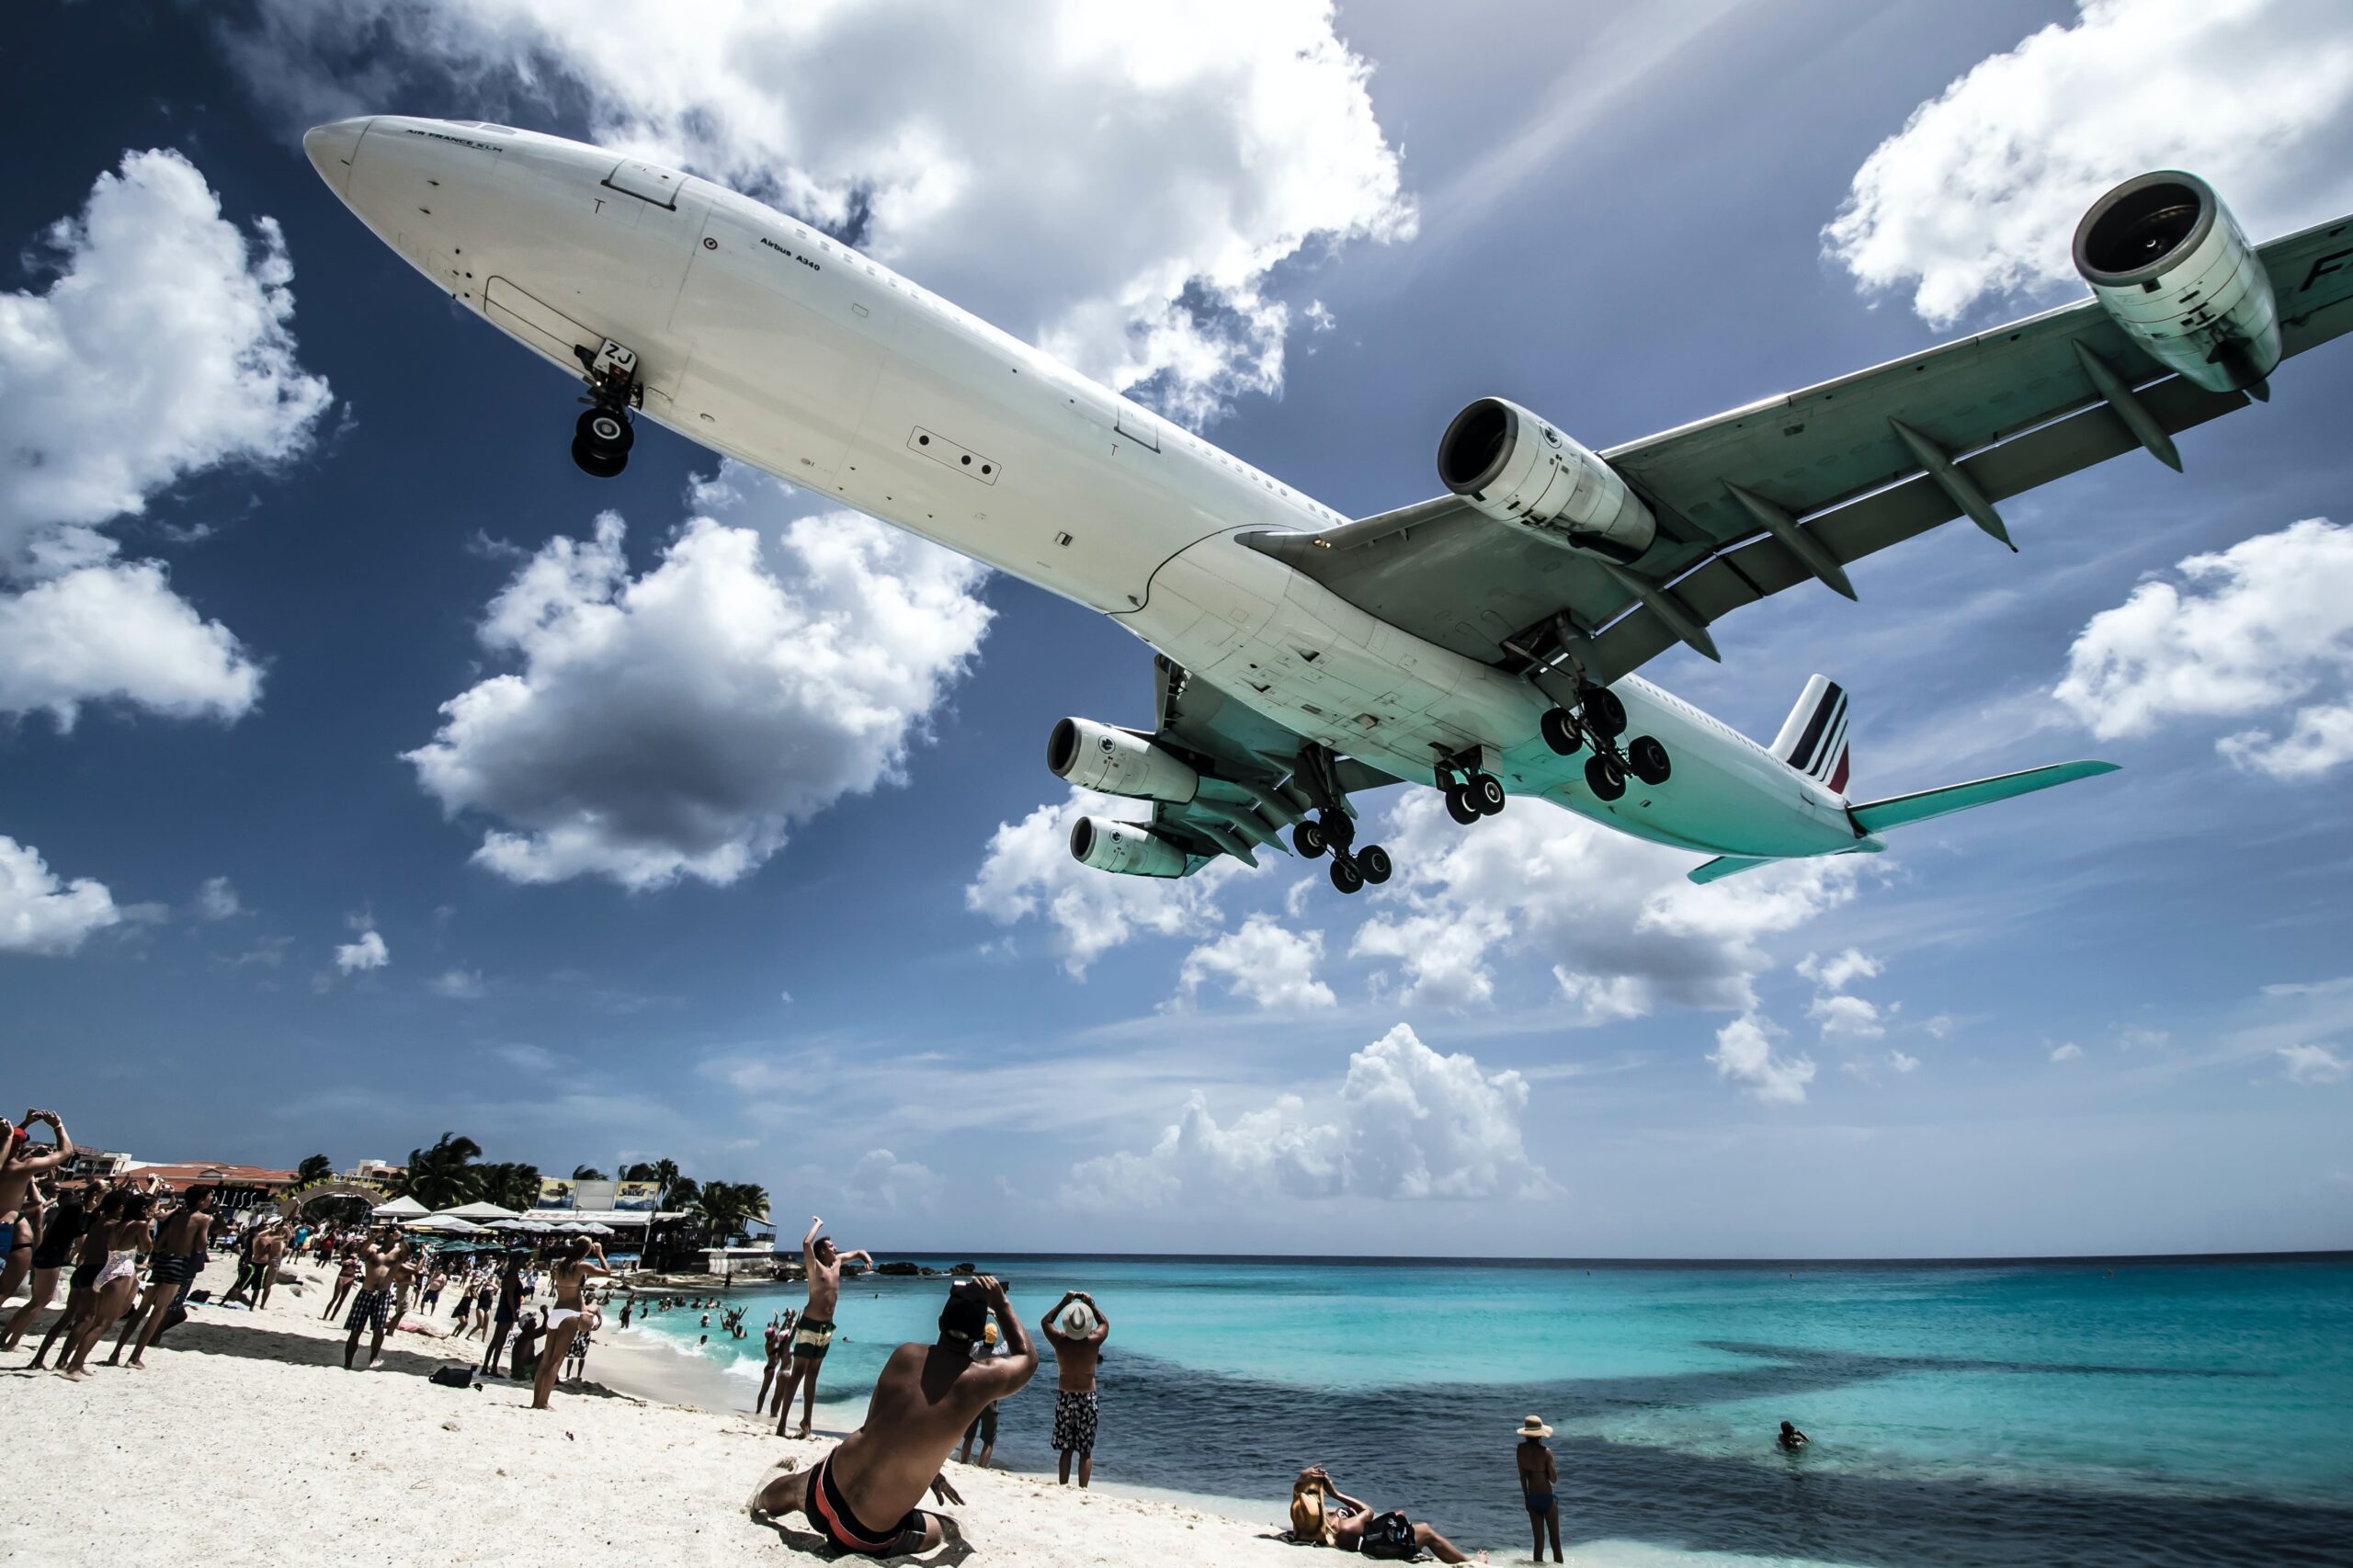 St Maarten beach plane p&o cruises caribbean